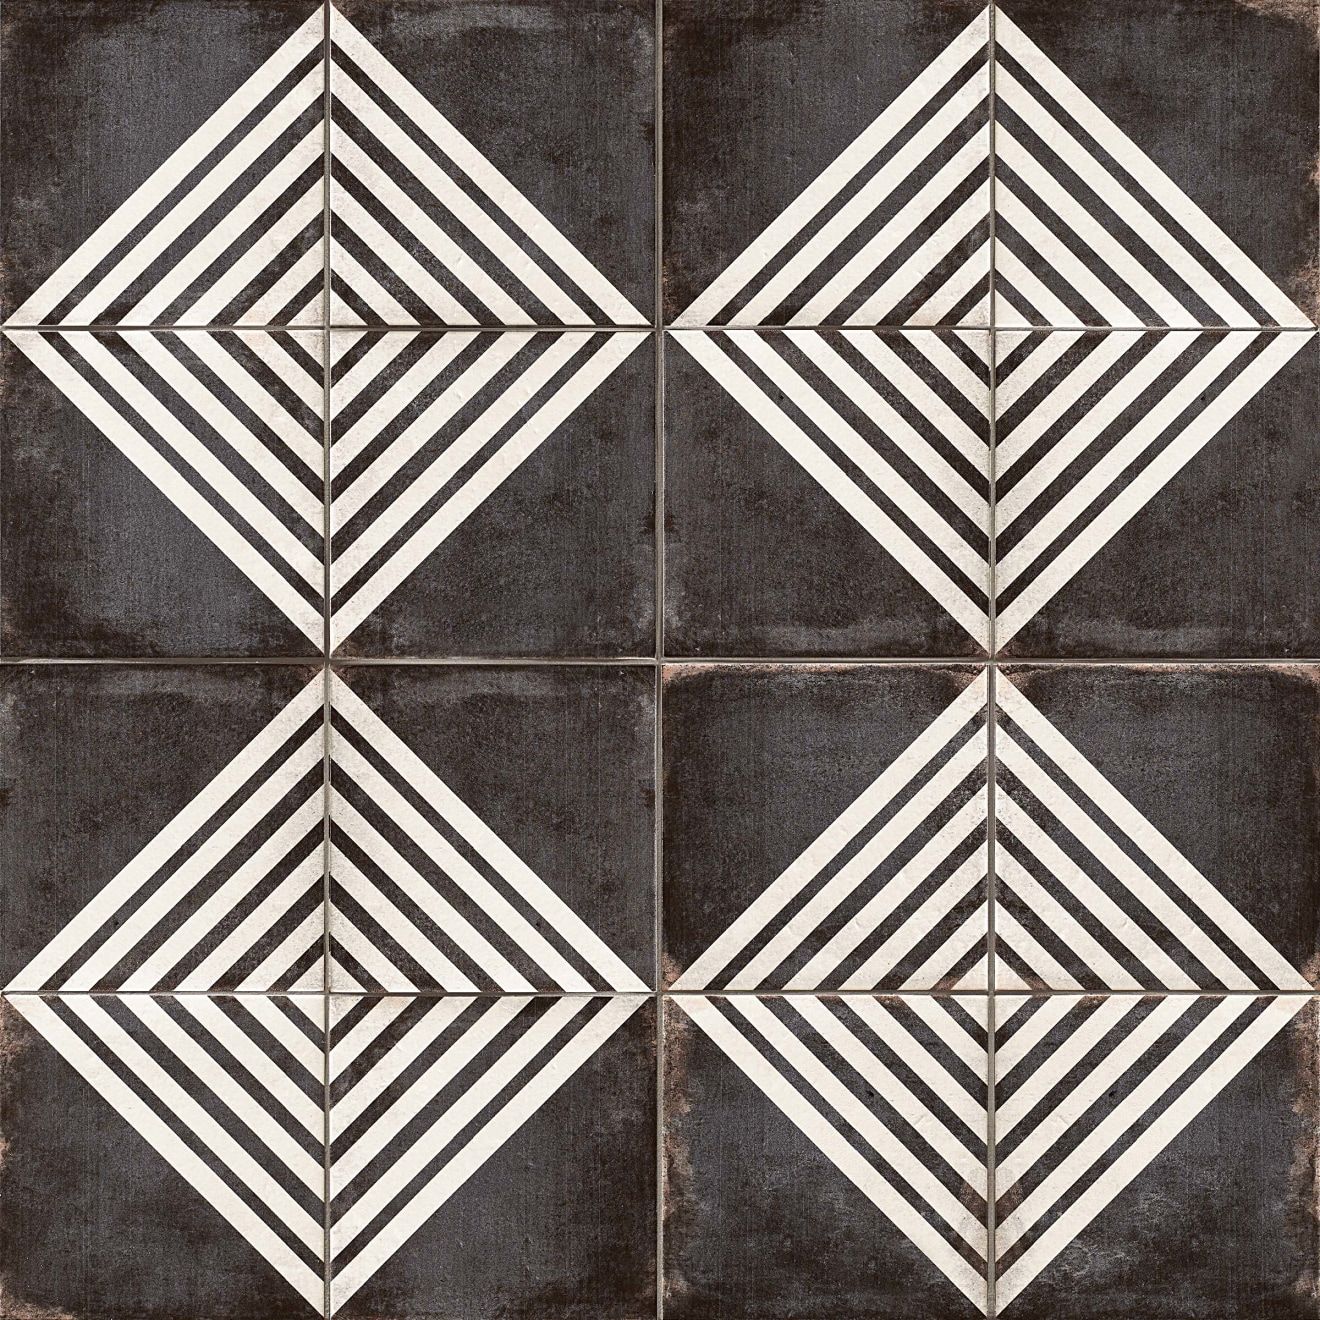 Vivace 9" x 9" Decorative Tile in Roads Caviar | Bedrosians Tile & Stone